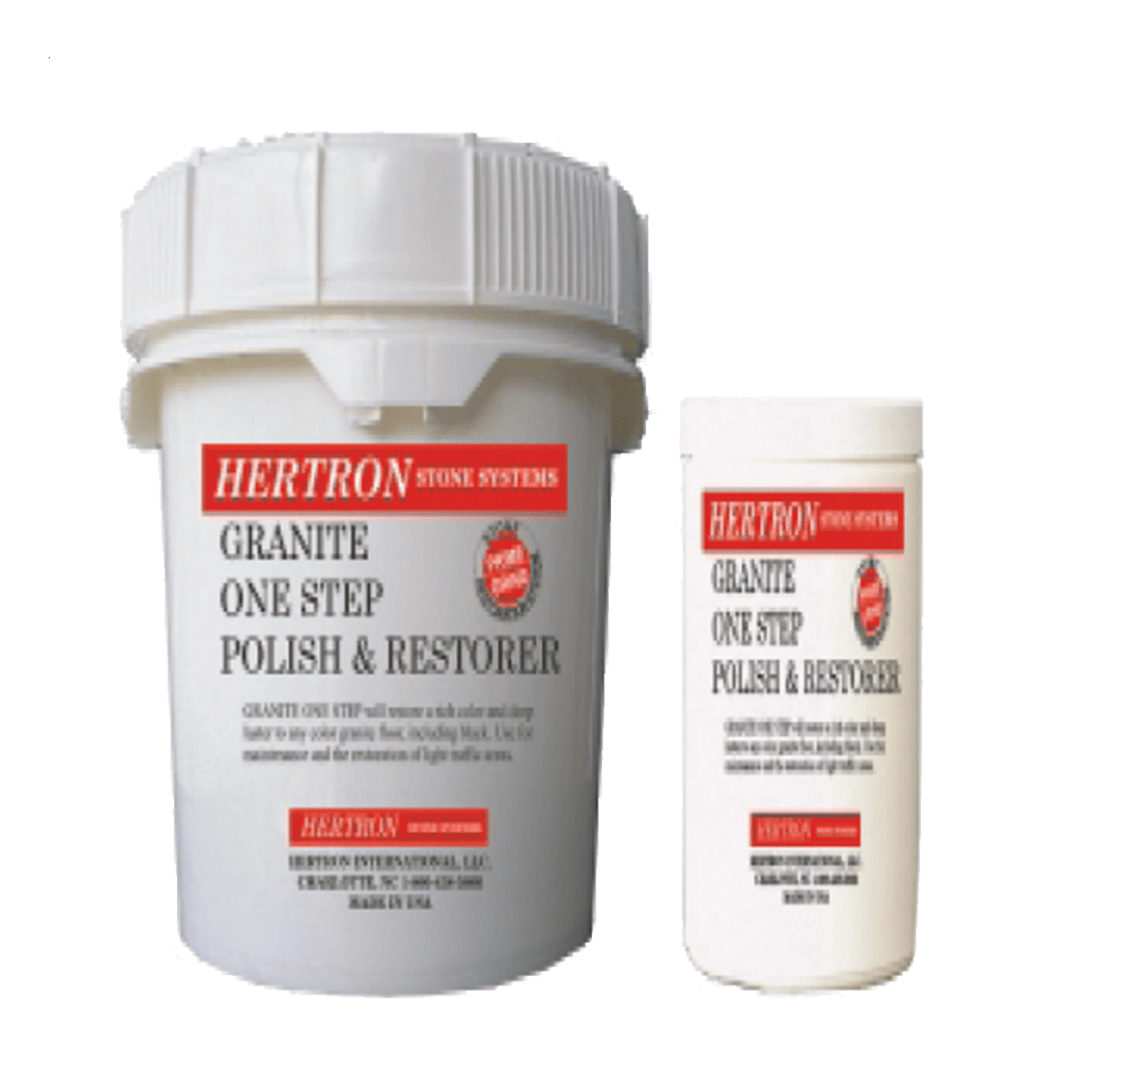 Hertron Granite One-Step Polisher & Restorer - Case of 6 - Hertron International